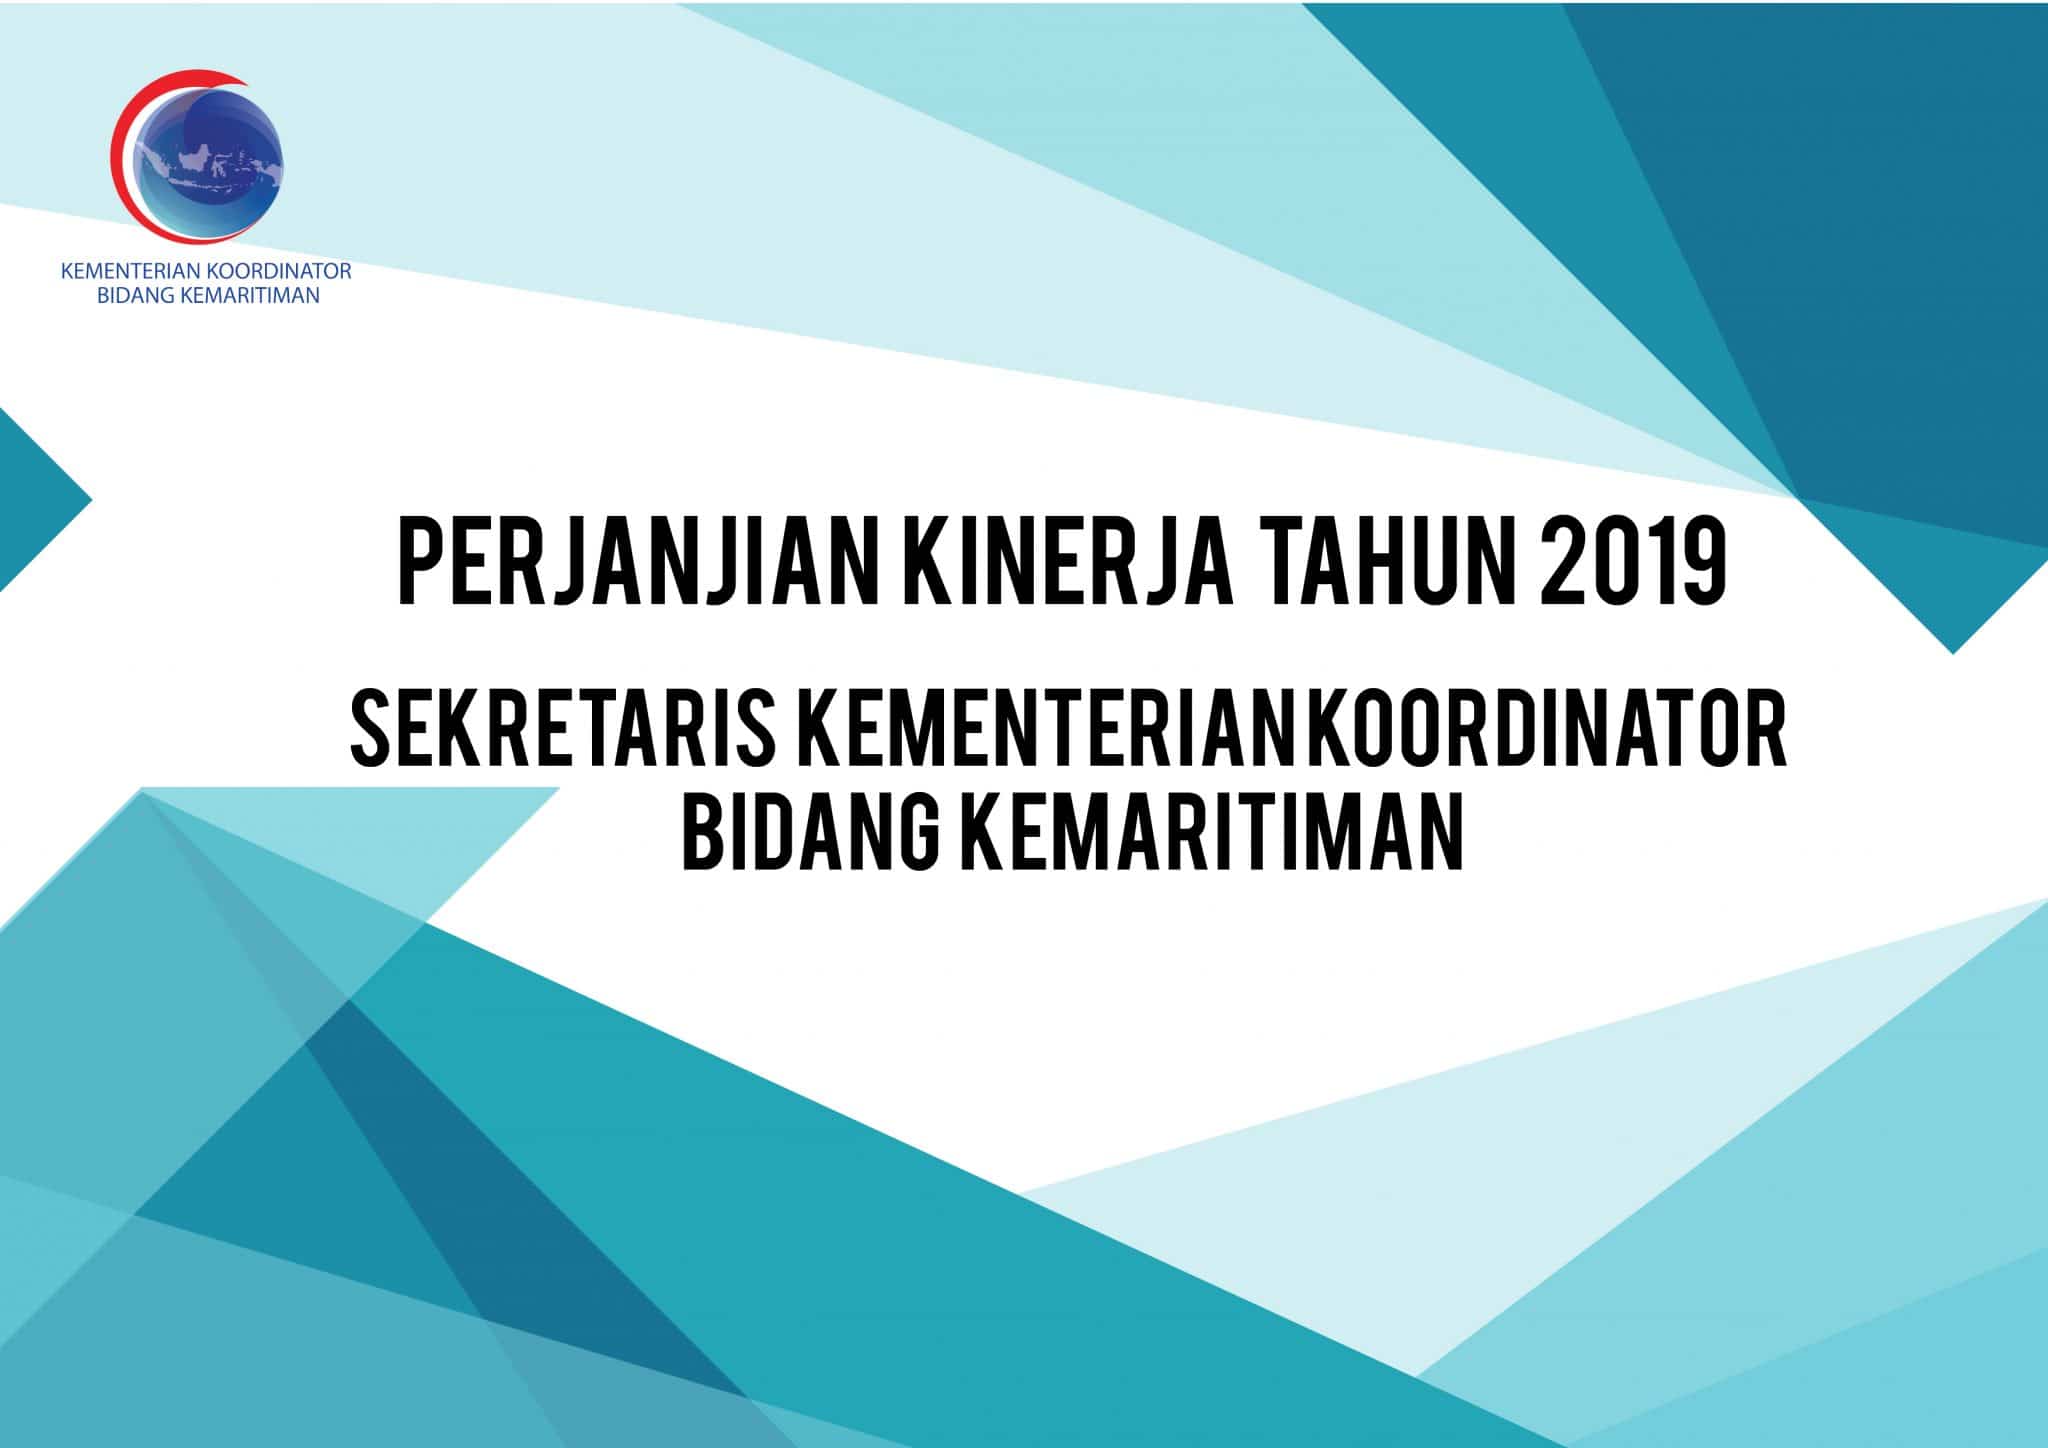 Perjanjian Kinerja Tahun 2019 Sekretaris Kementerian Koordinator Bidang Kemaritiman